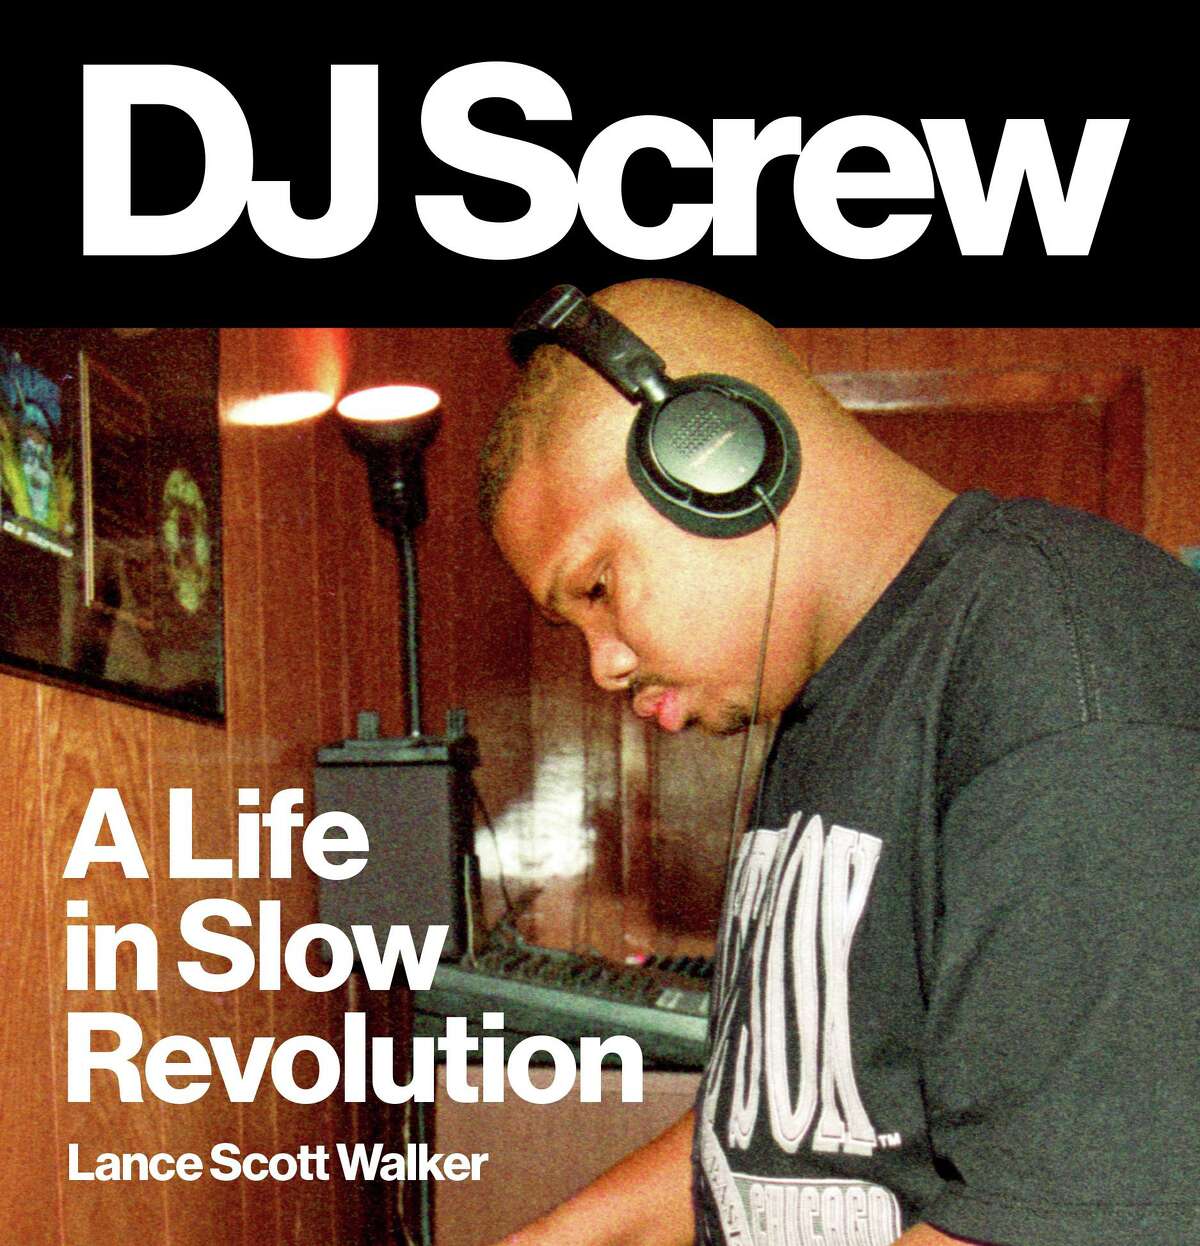 Celebrating DJ Screw's 'June 27th' after the death of rapper Big Pokey